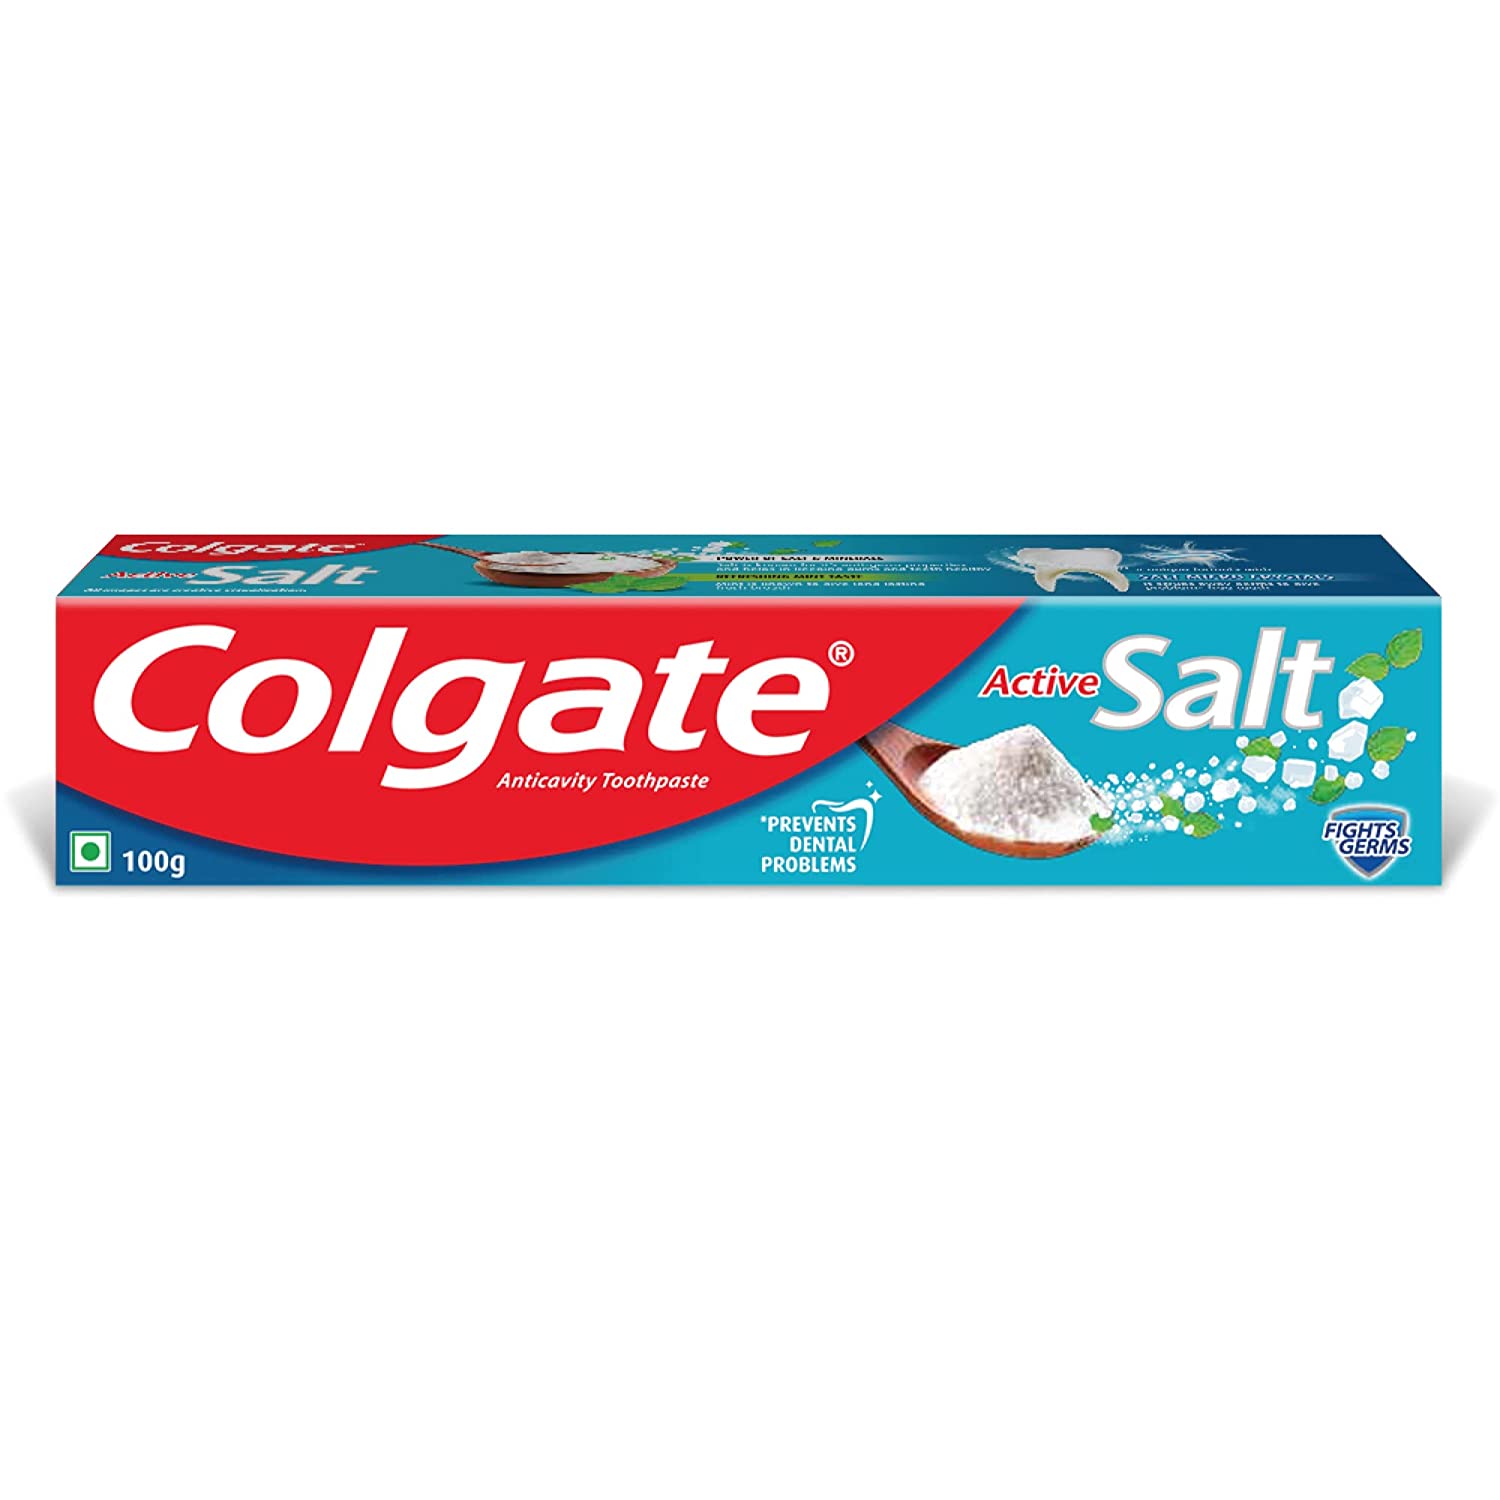 Colgate Toothpaste Active Salt Fights Germs 100g (Origin: India)